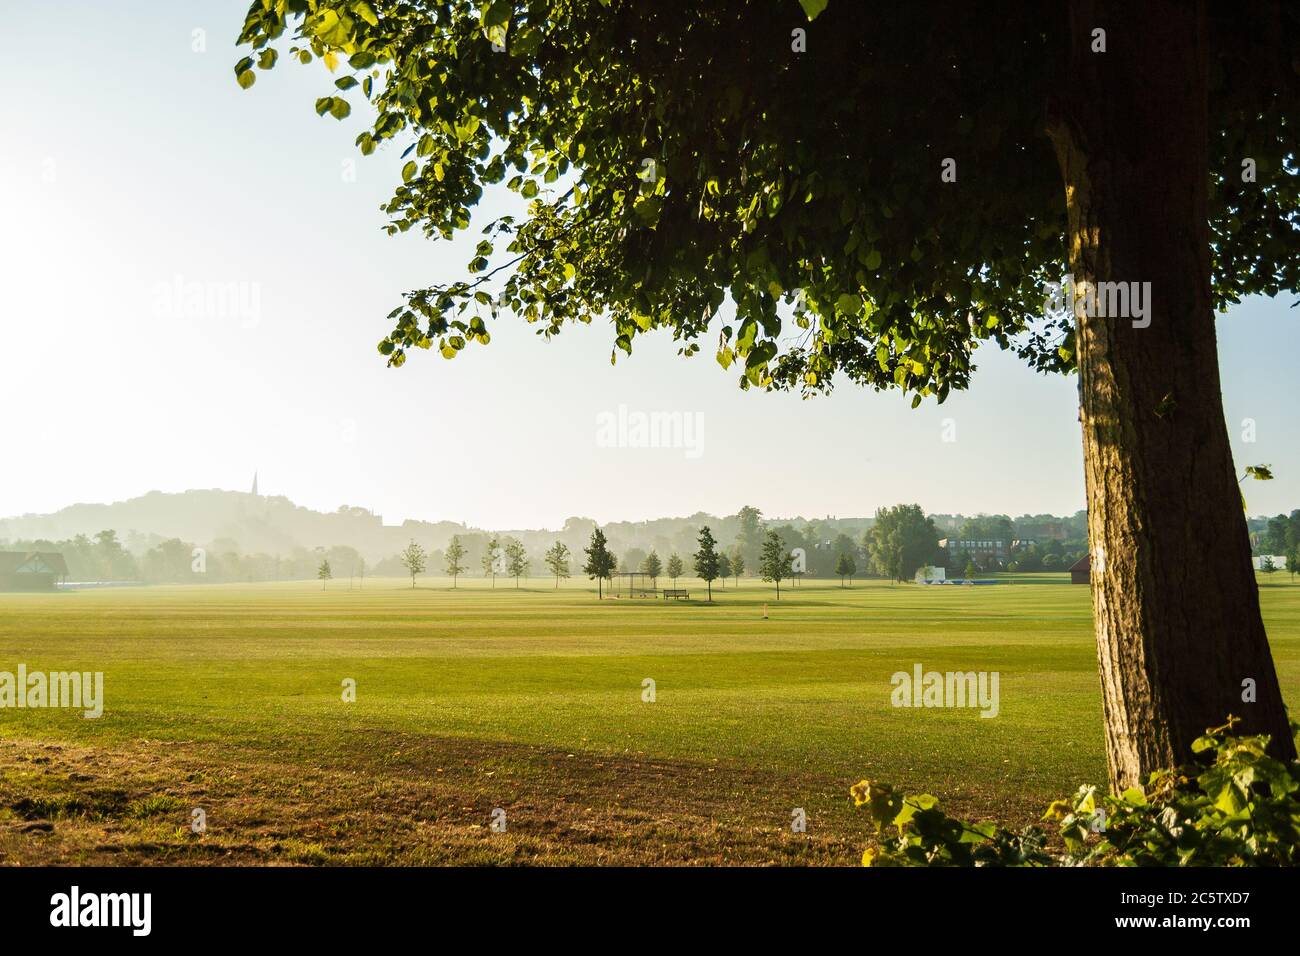 Cricket Field in Harrow on the Hill, London, England Stockfoto